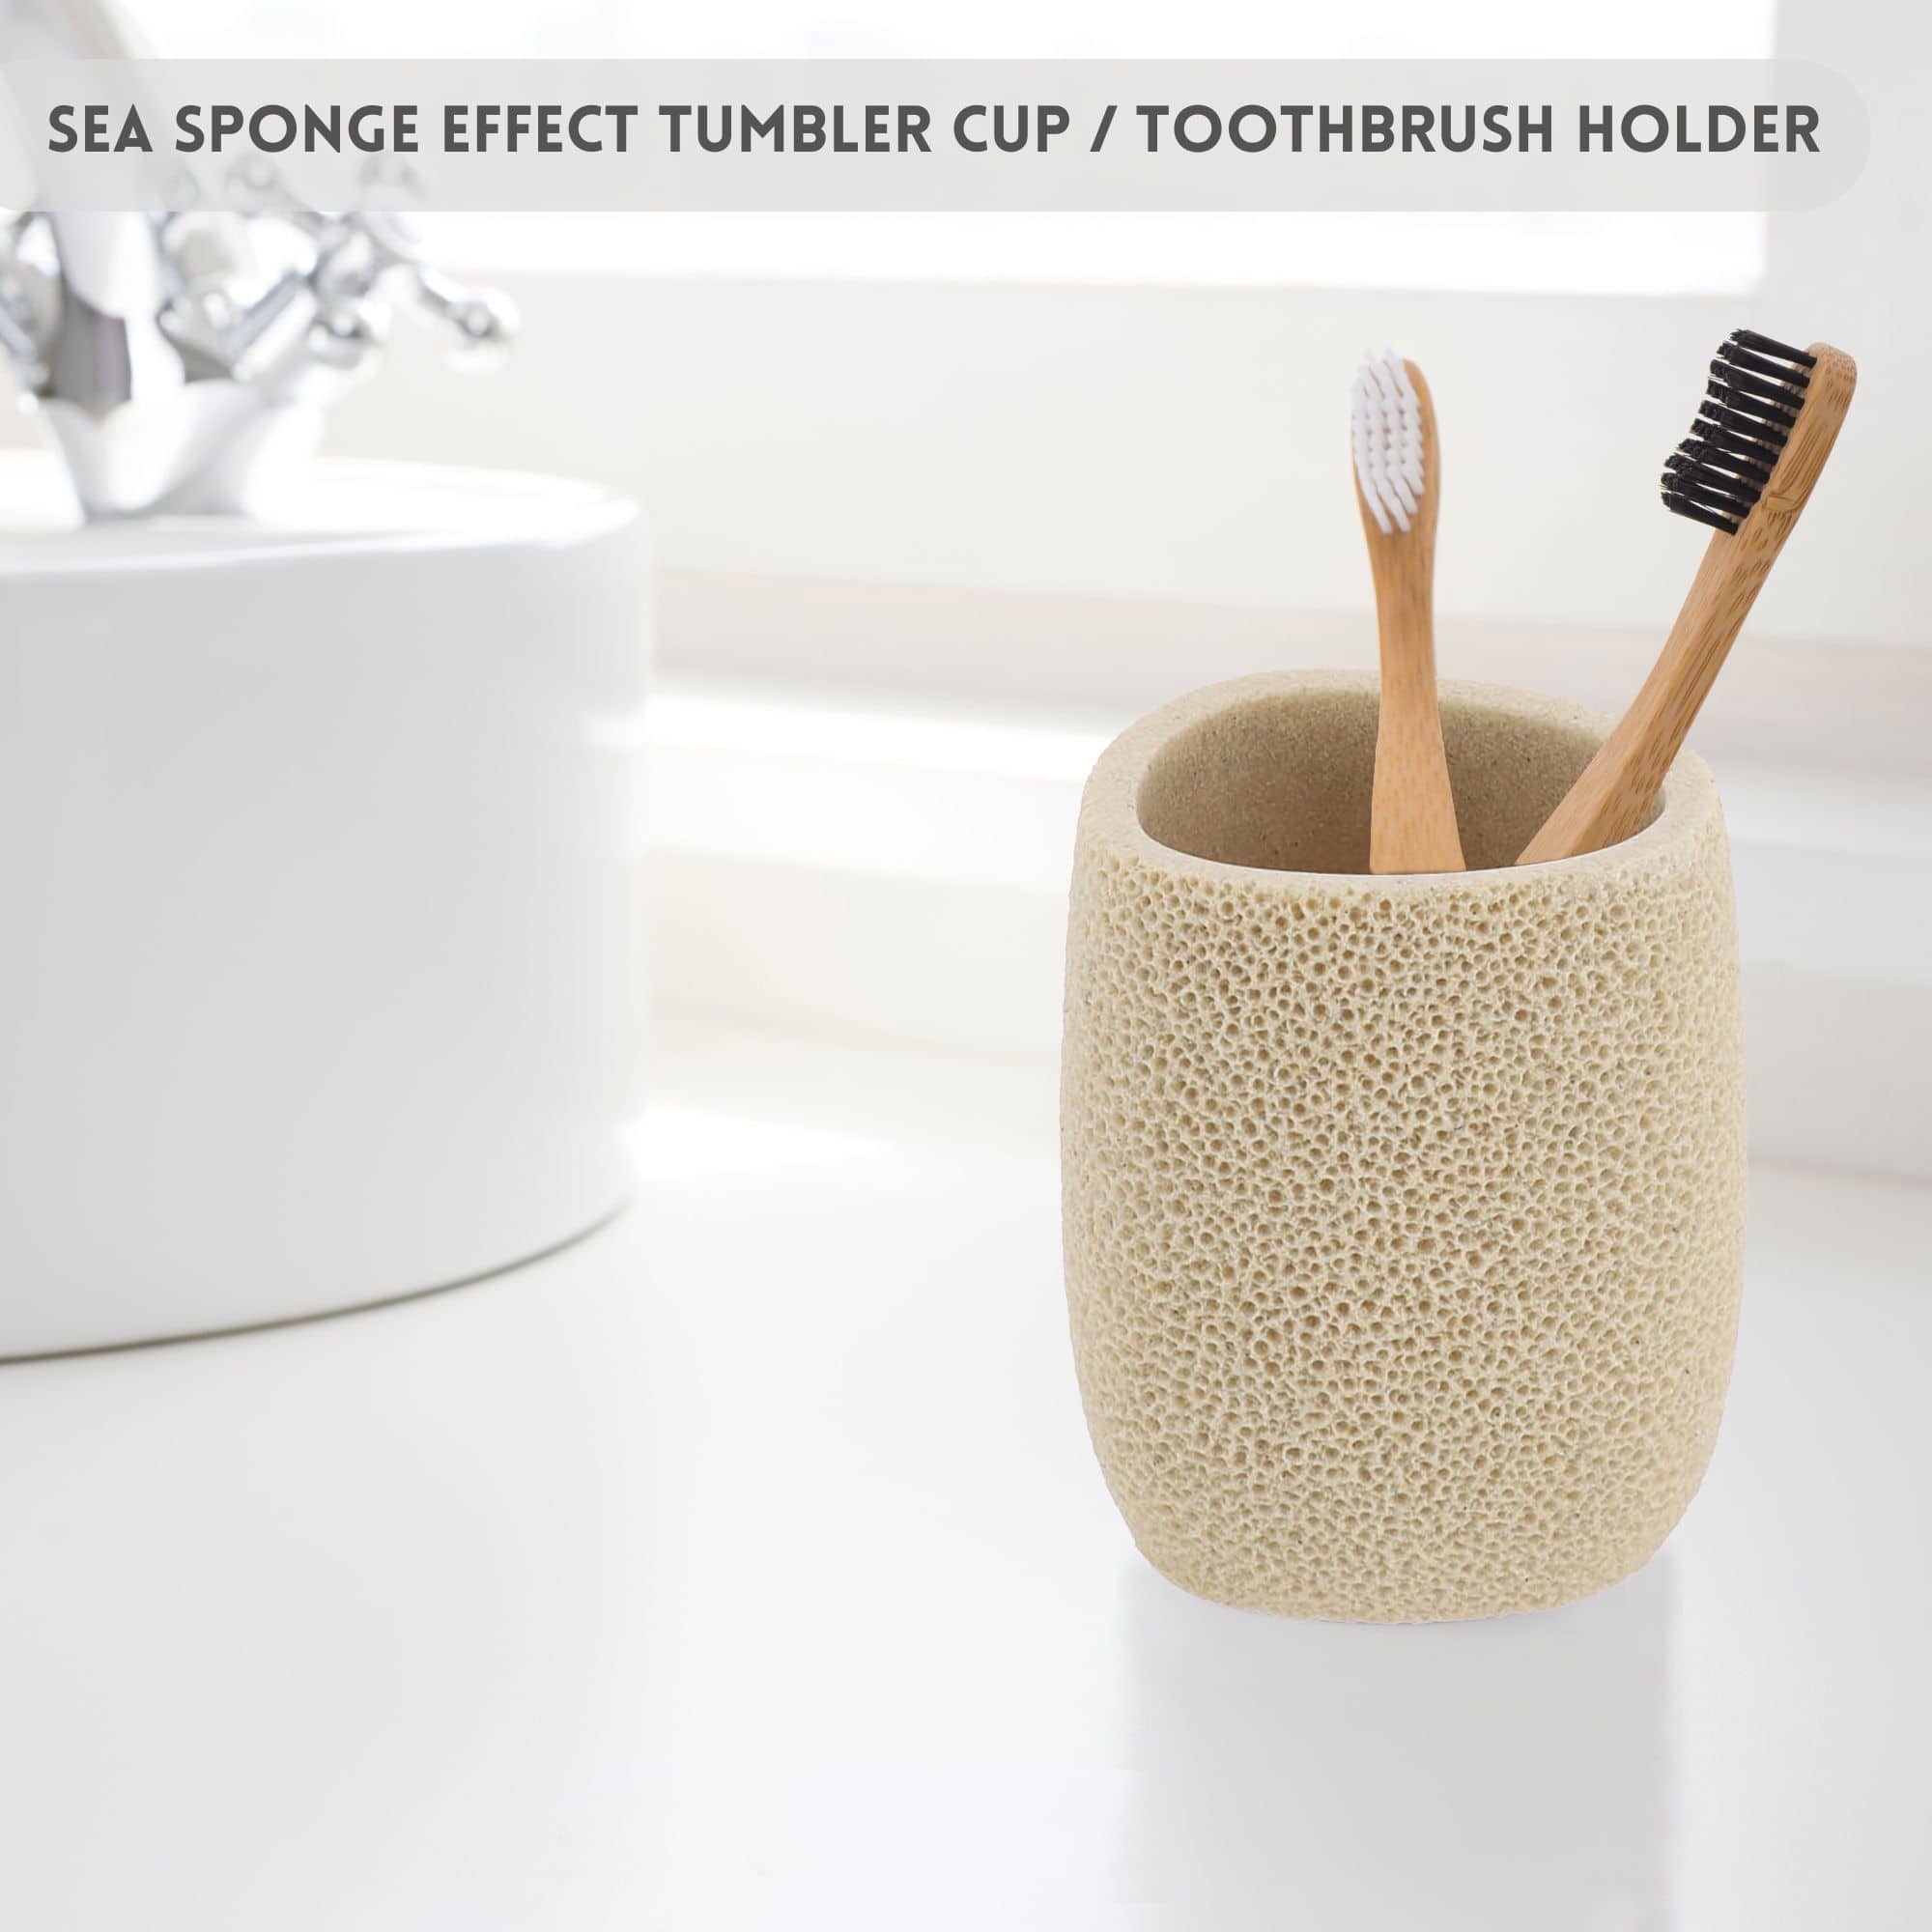 Tumbler cup/toothbrush holder on bathroom sink